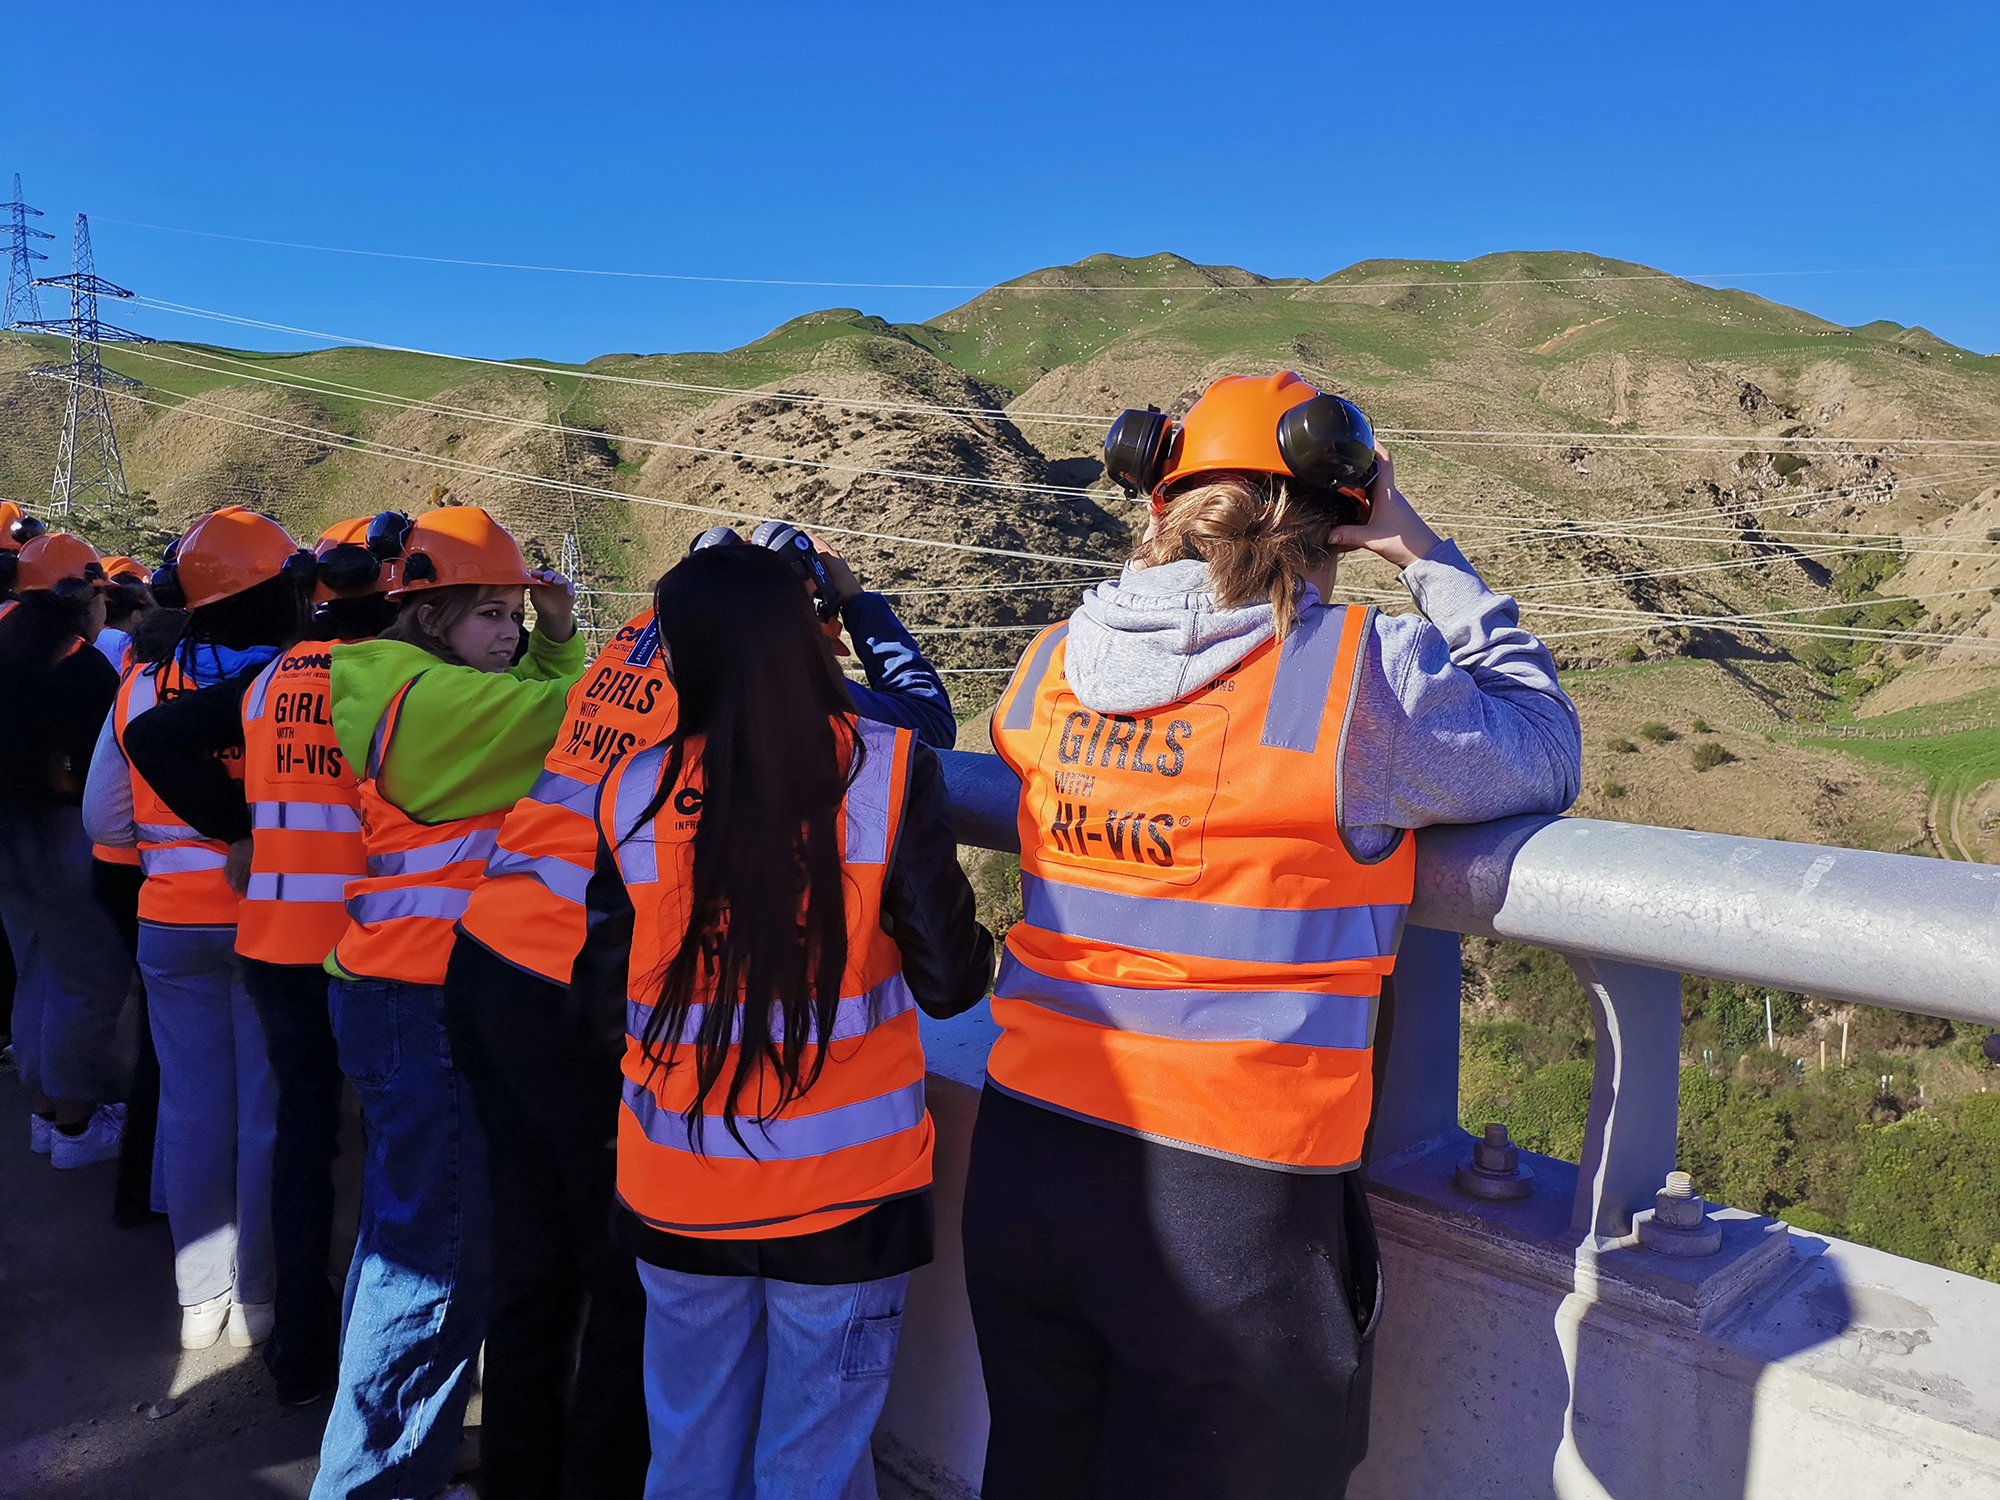 Girls with Hi Vis jackets and helmets standing on Te Ara a Toa bridge looking towards hills.